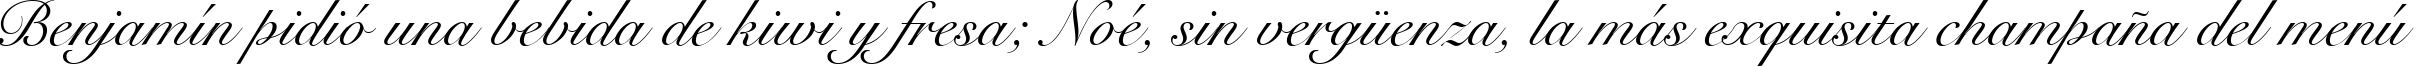 Пример написания шрифтом Snell BT текста на испанском